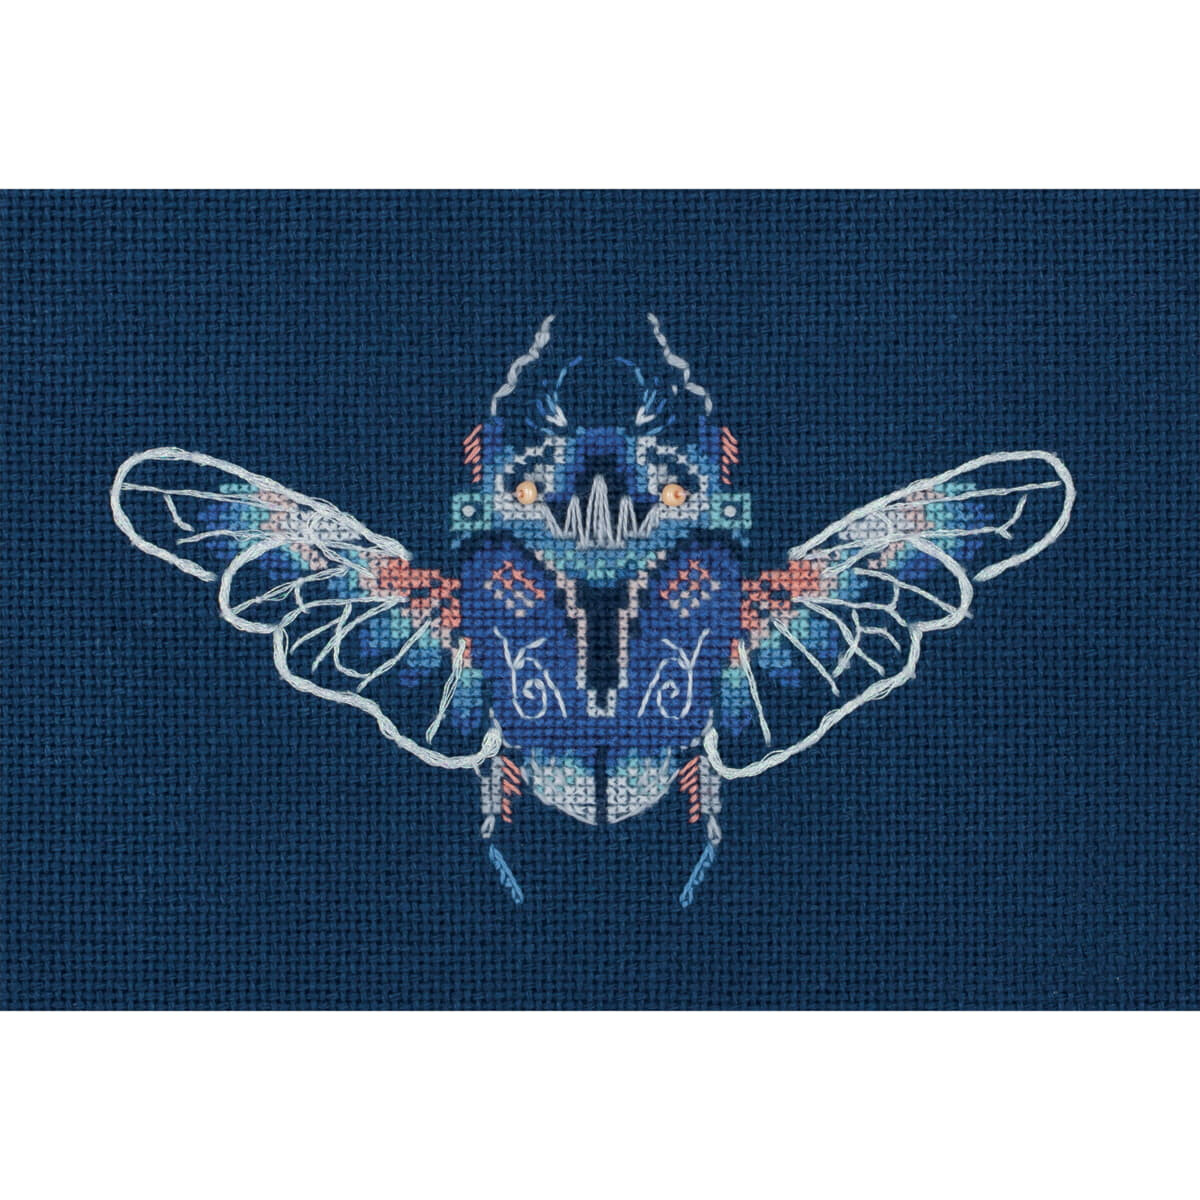 Panna counted cross stitch kit "Fantasy bugs,...